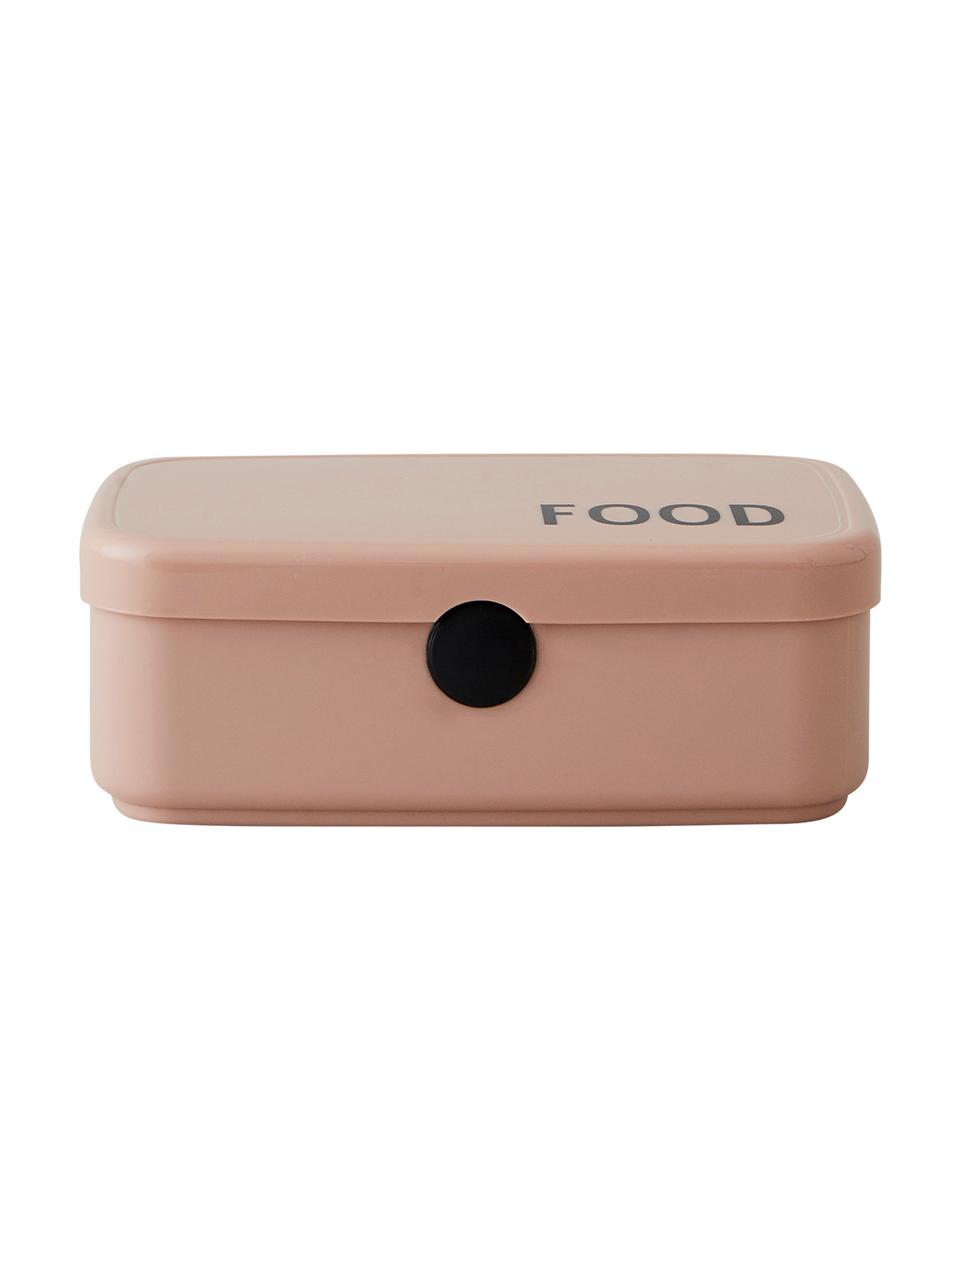 Krabička na svačinu Food, Tritan (umělá hmota, bez BPA), Béžová, Š 18 cm, V 6 cm